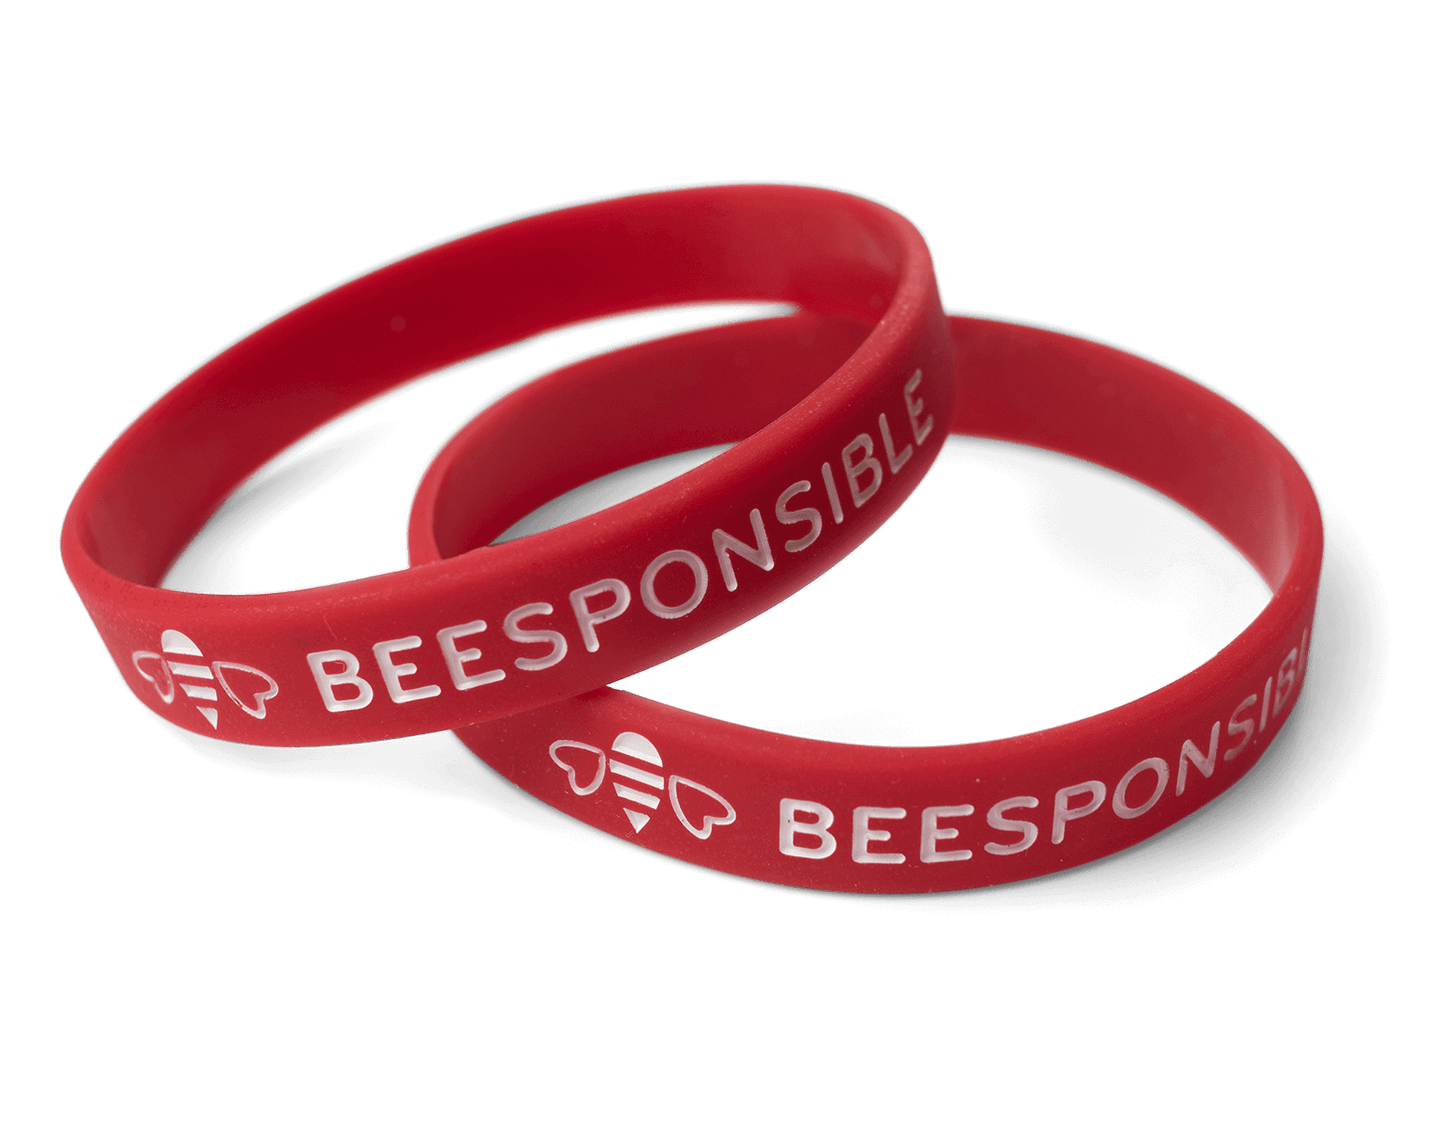 Beesponsible Bracelets